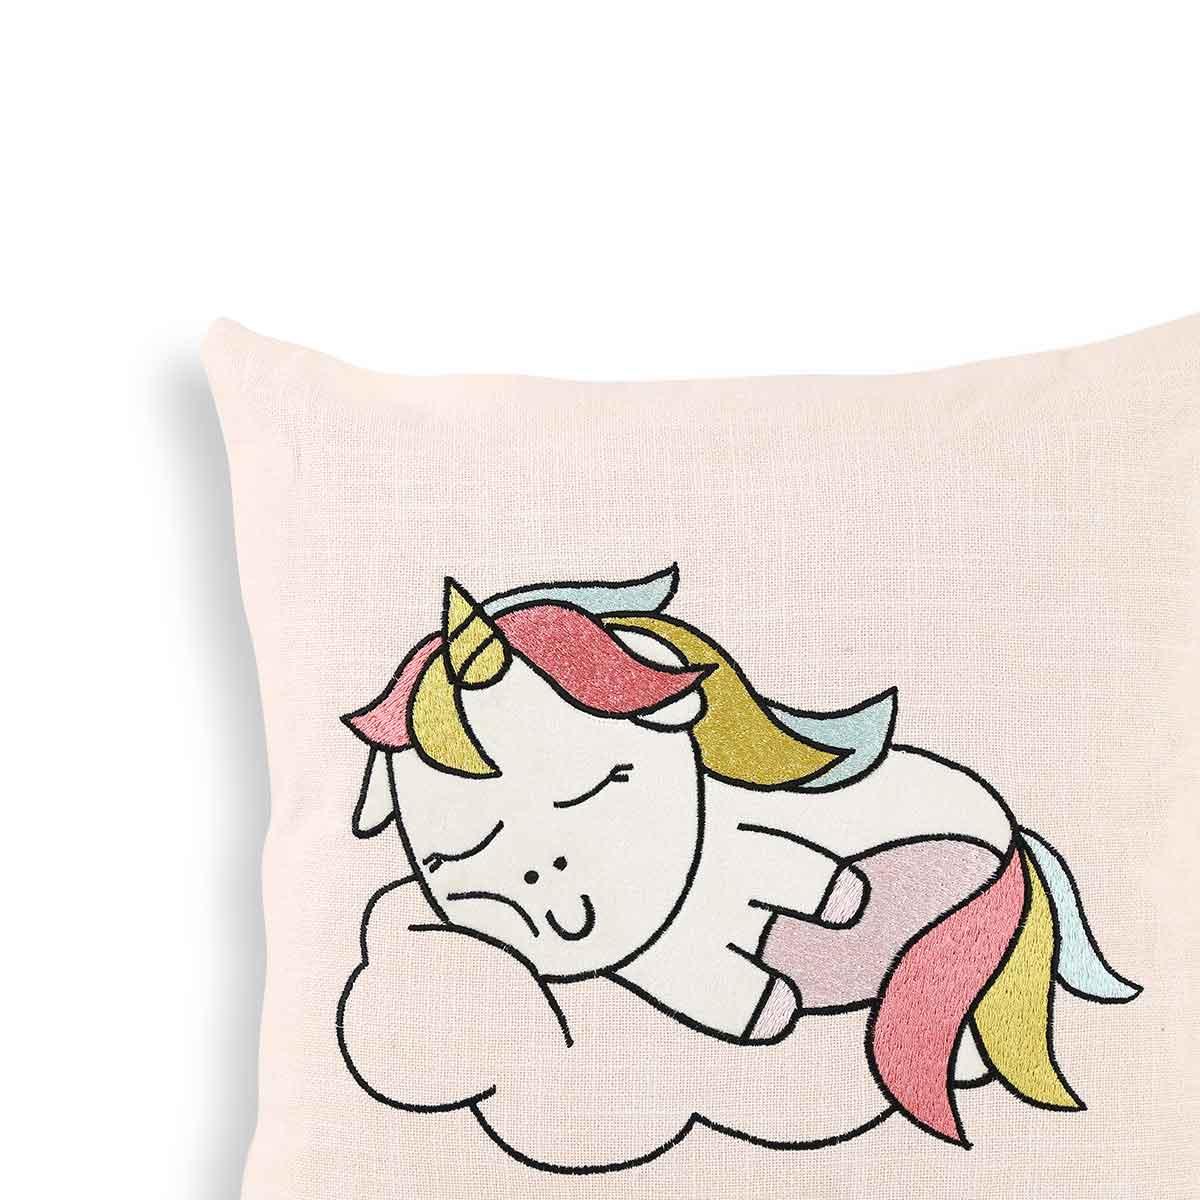 Sleeping Baby Unicorn Kids Cushion Cover 14 x 14 Inch